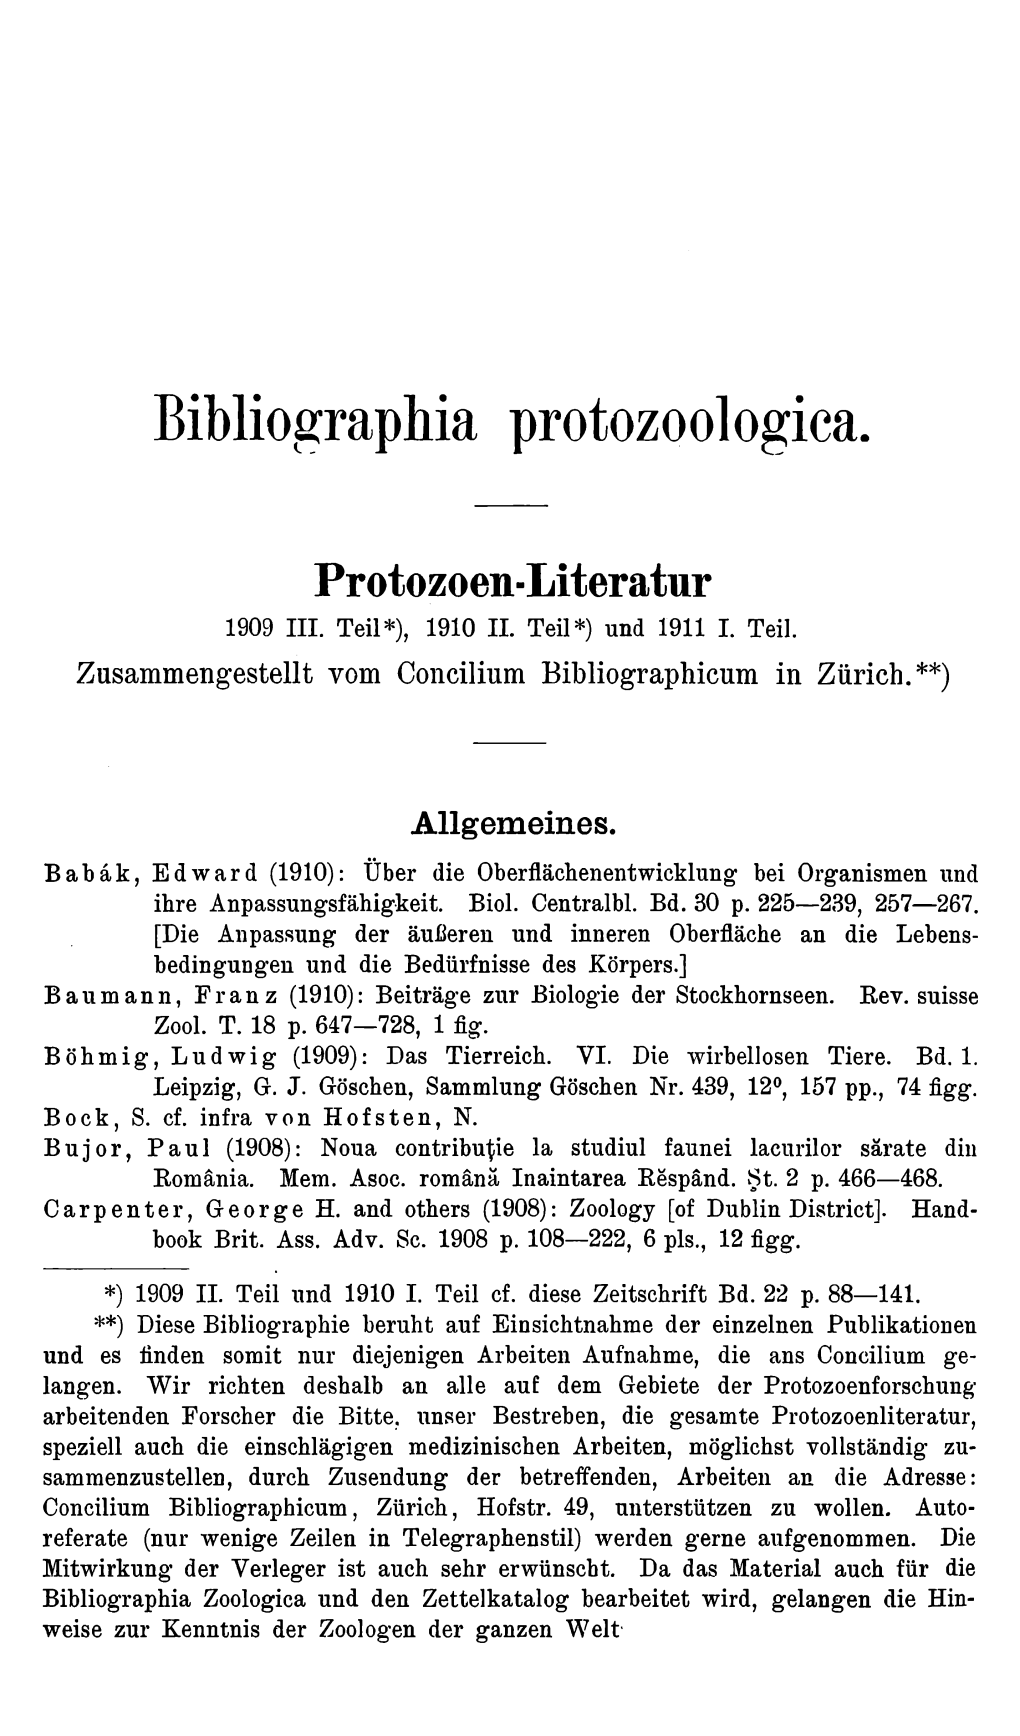 Protozoen-Literatur. Herbert Haviland Field